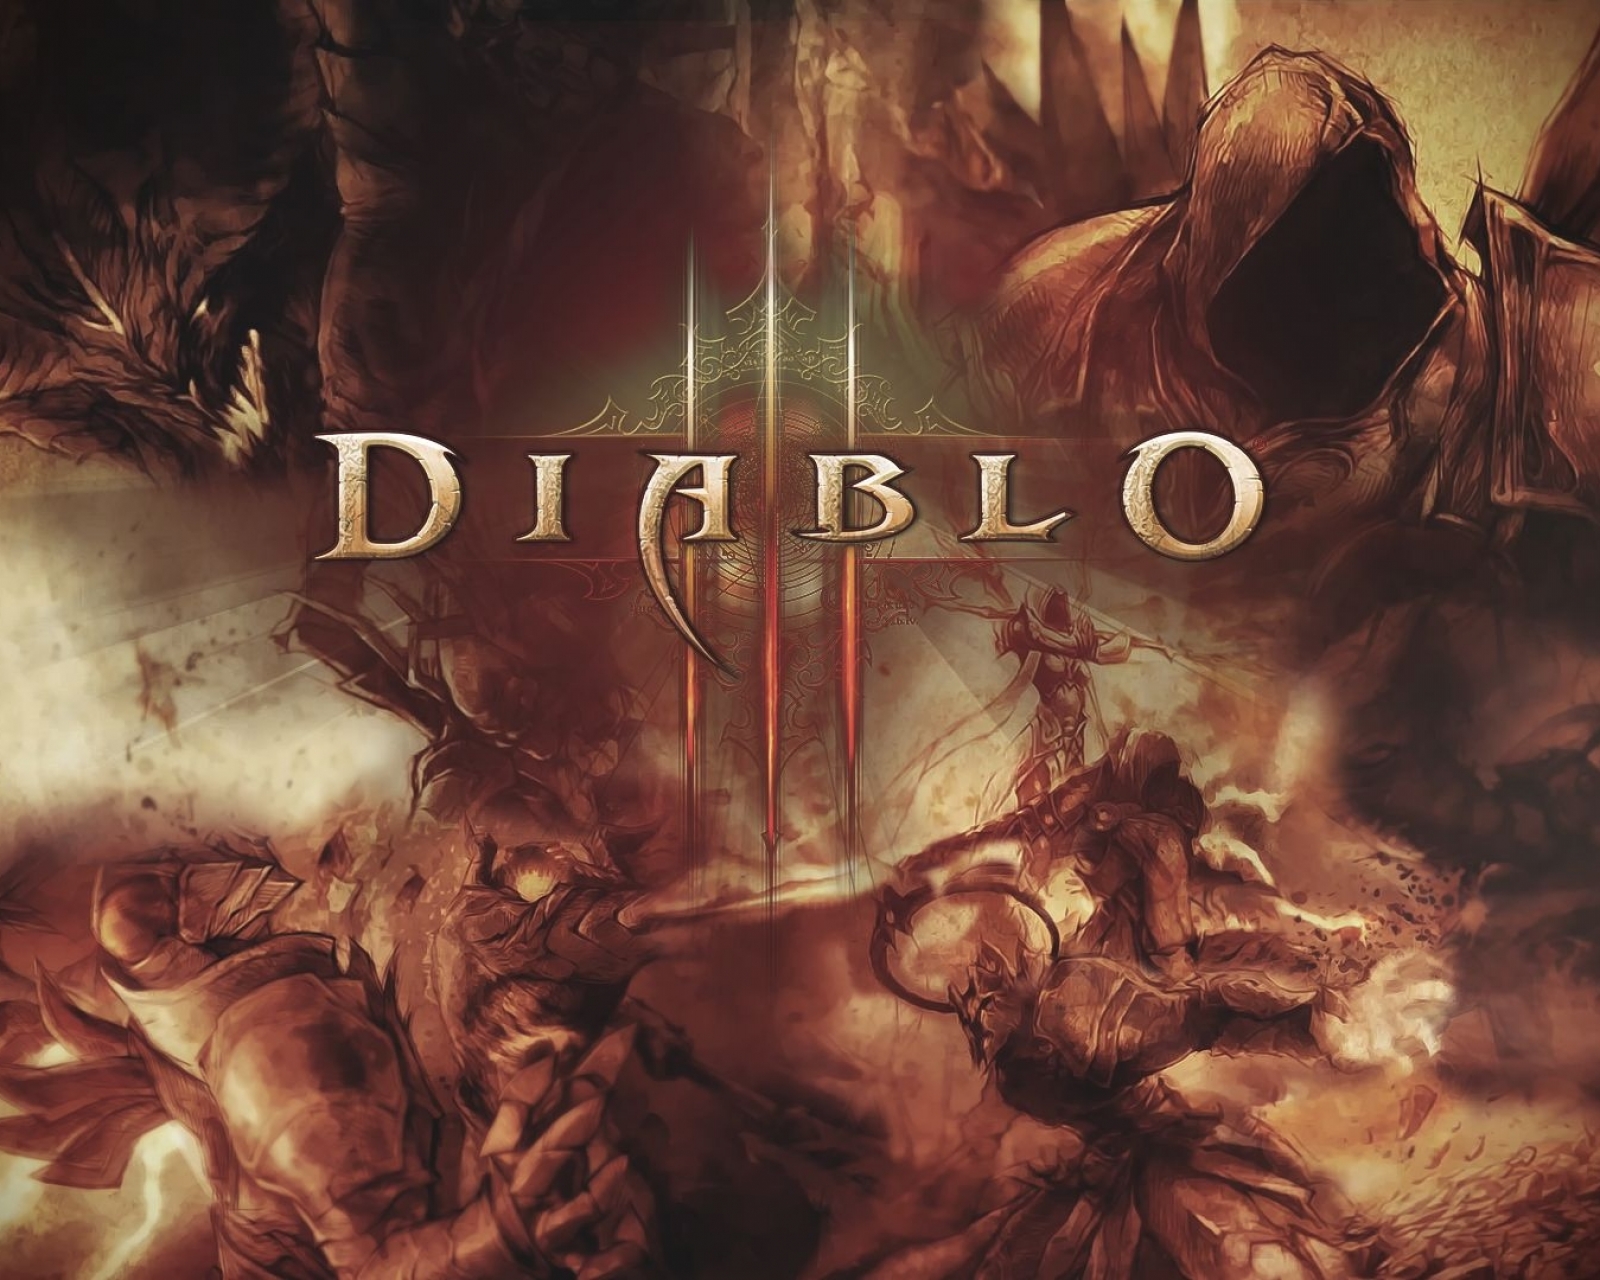 Baixe gratuitamente a imagem Diablo, Videogame, Diablo Iii, Tyrael (Diablo Iii) na área de trabalho do seu PC